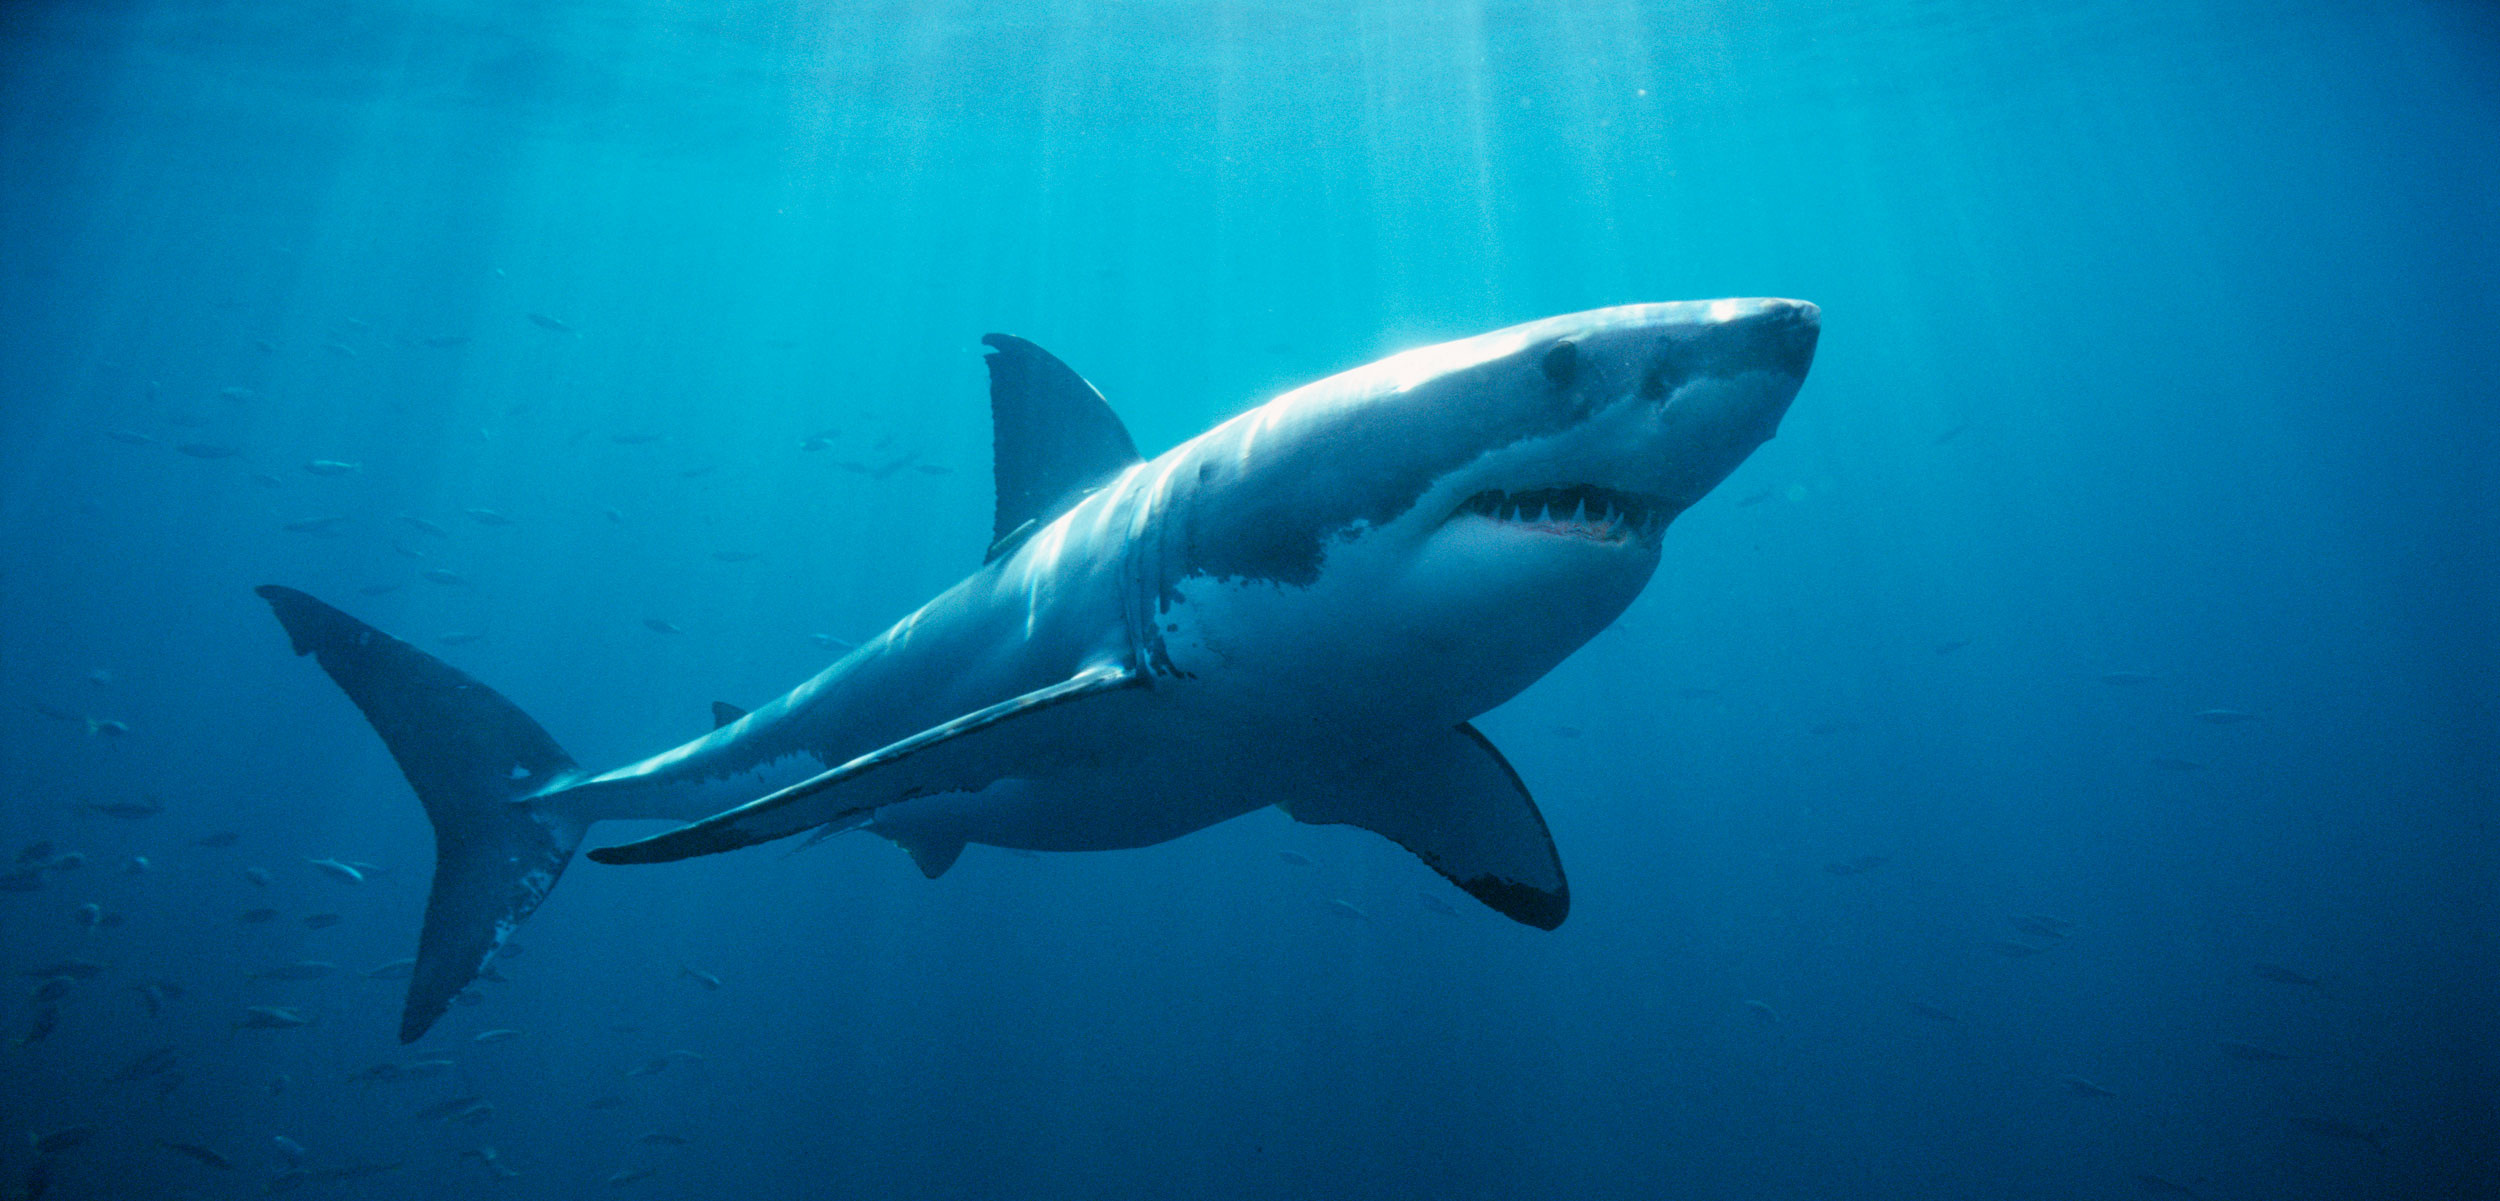 Underwater photo, Great white shark, Oceanic beauty, Captivating imagery, 2500x1210 Dual Screen Desktop